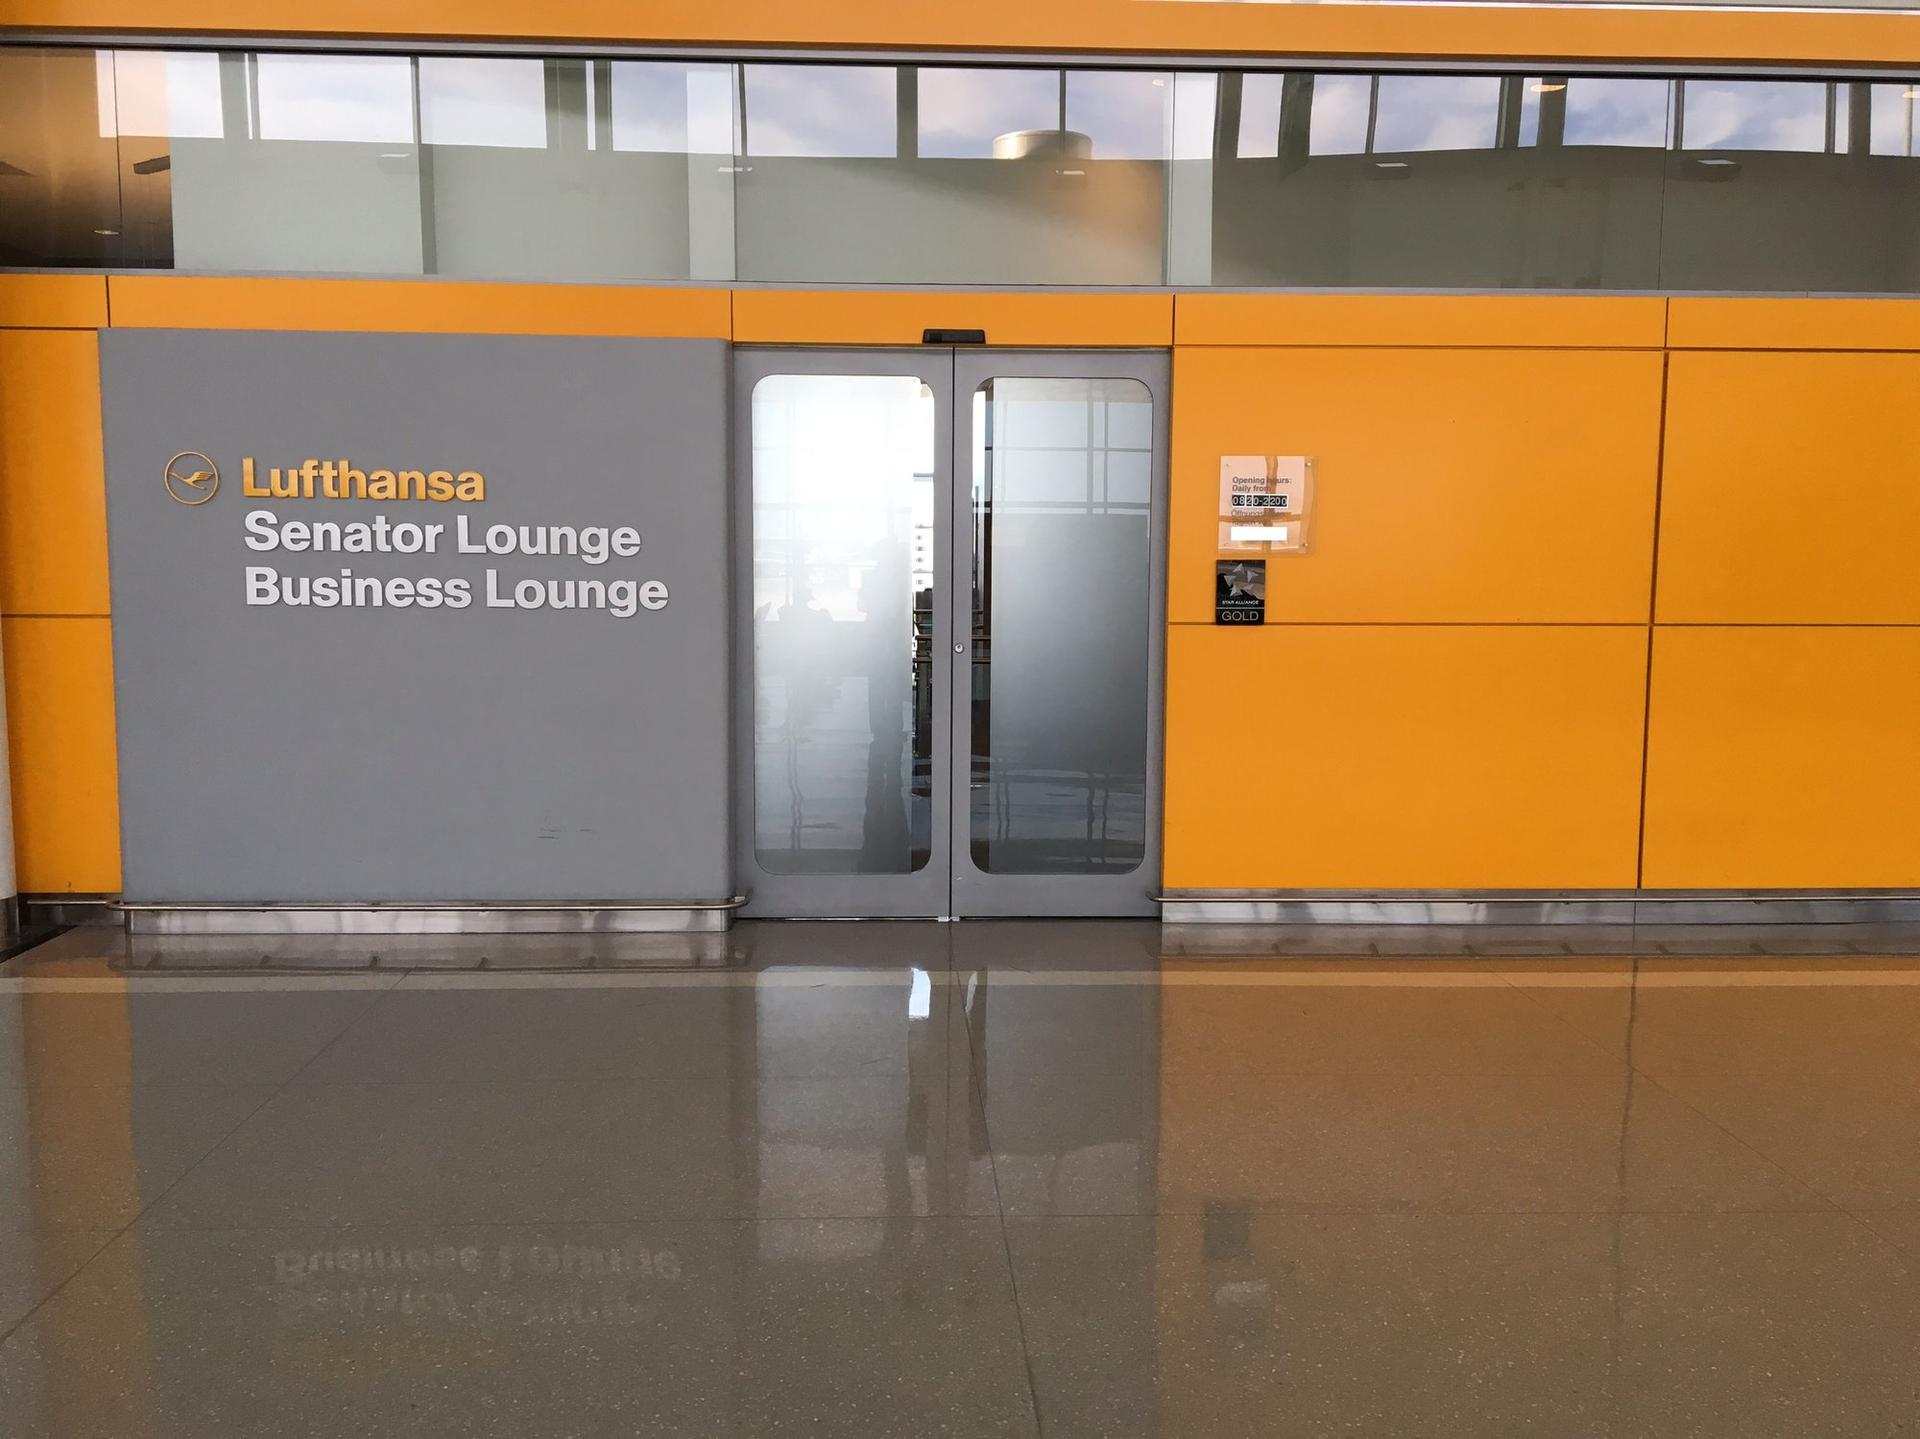 Lufthansa Business Lounge image 26 of 35